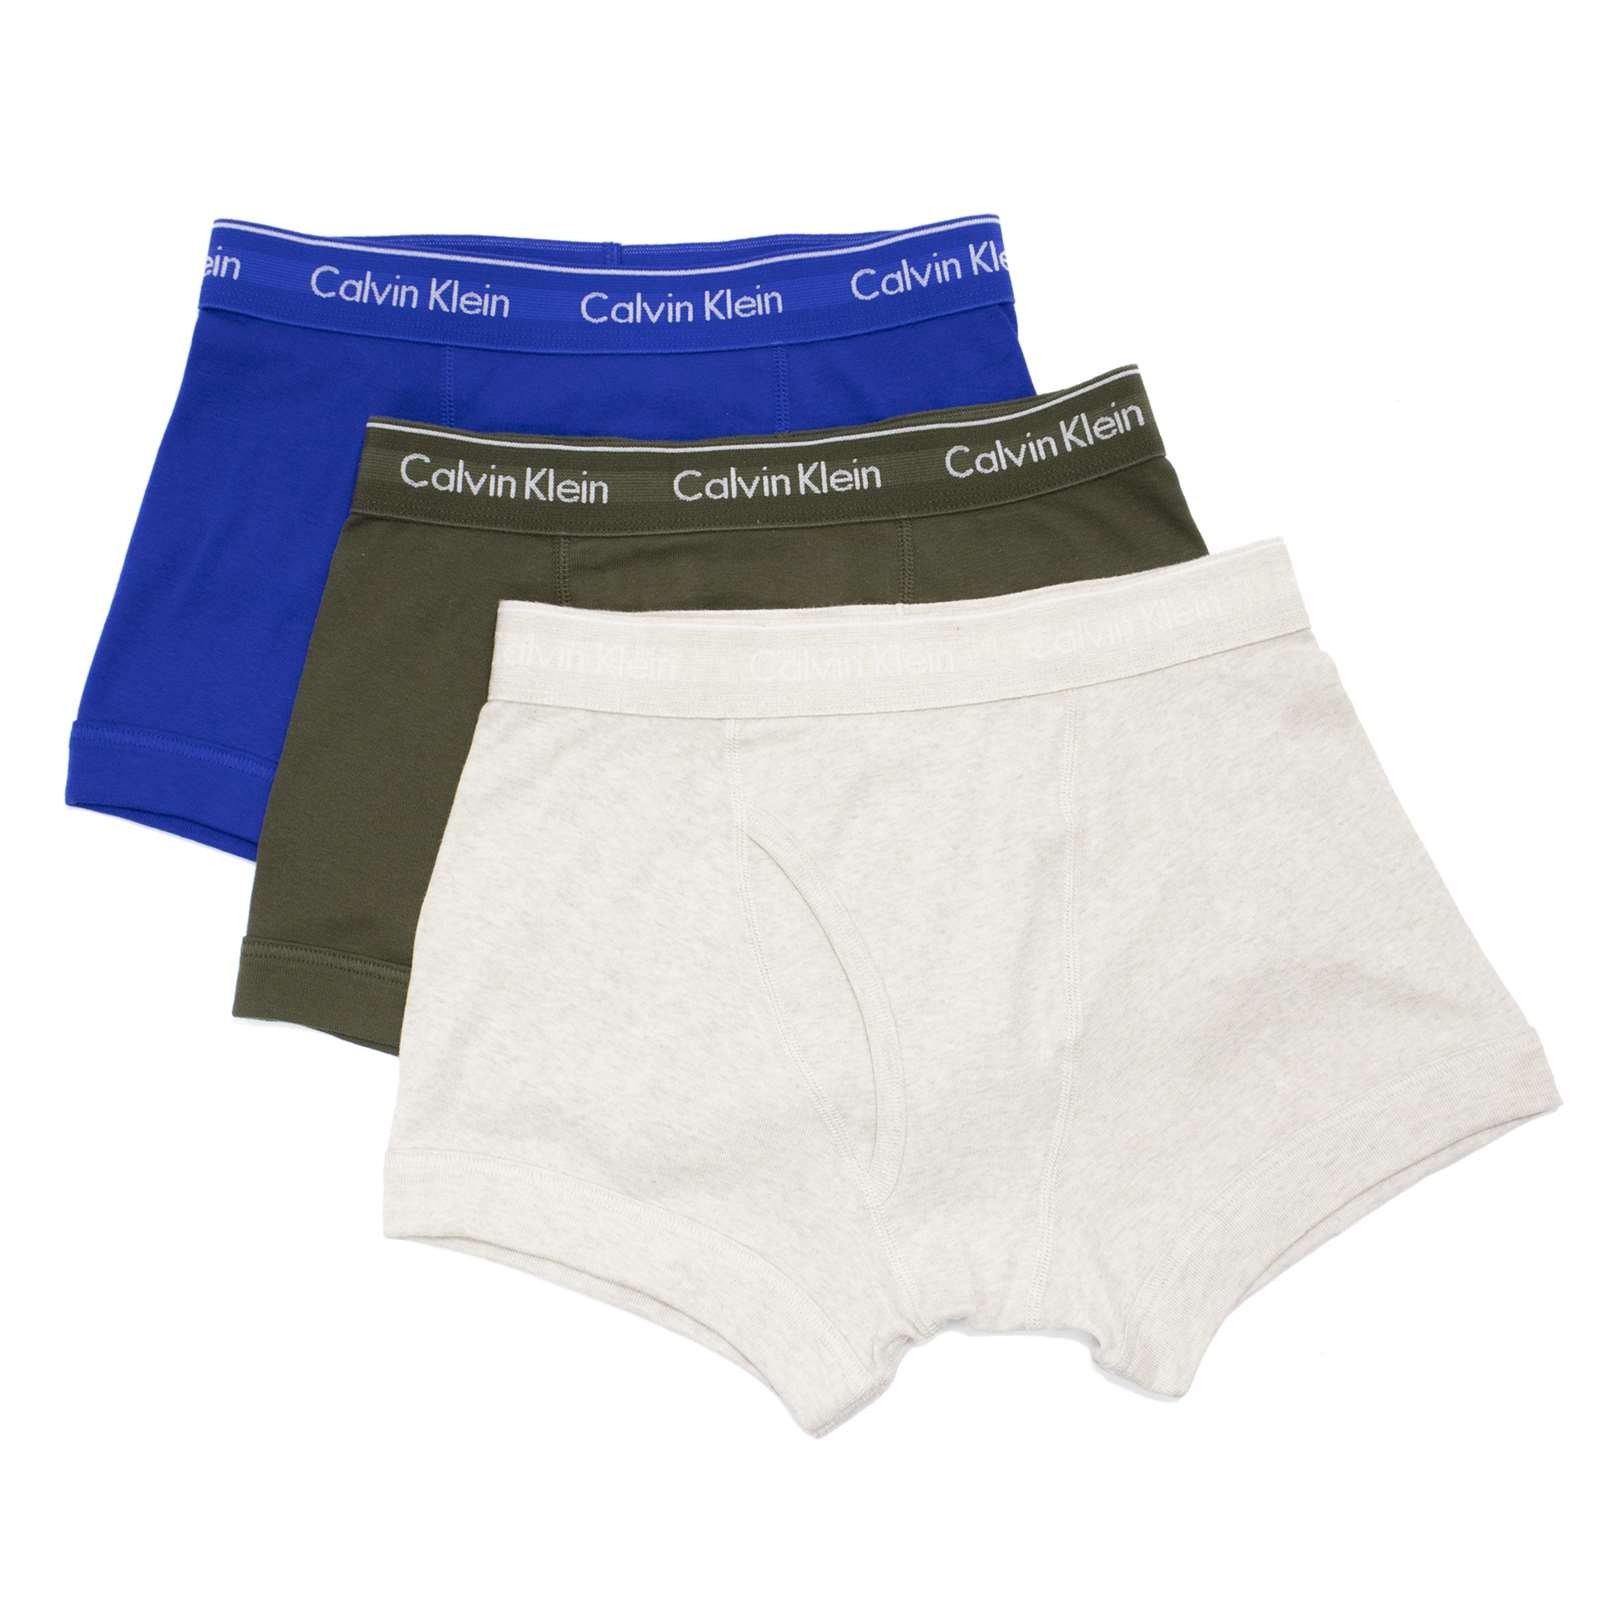 Calvin Klein Underwear Cotton Classic Fit 3-Pack Knit Boxers